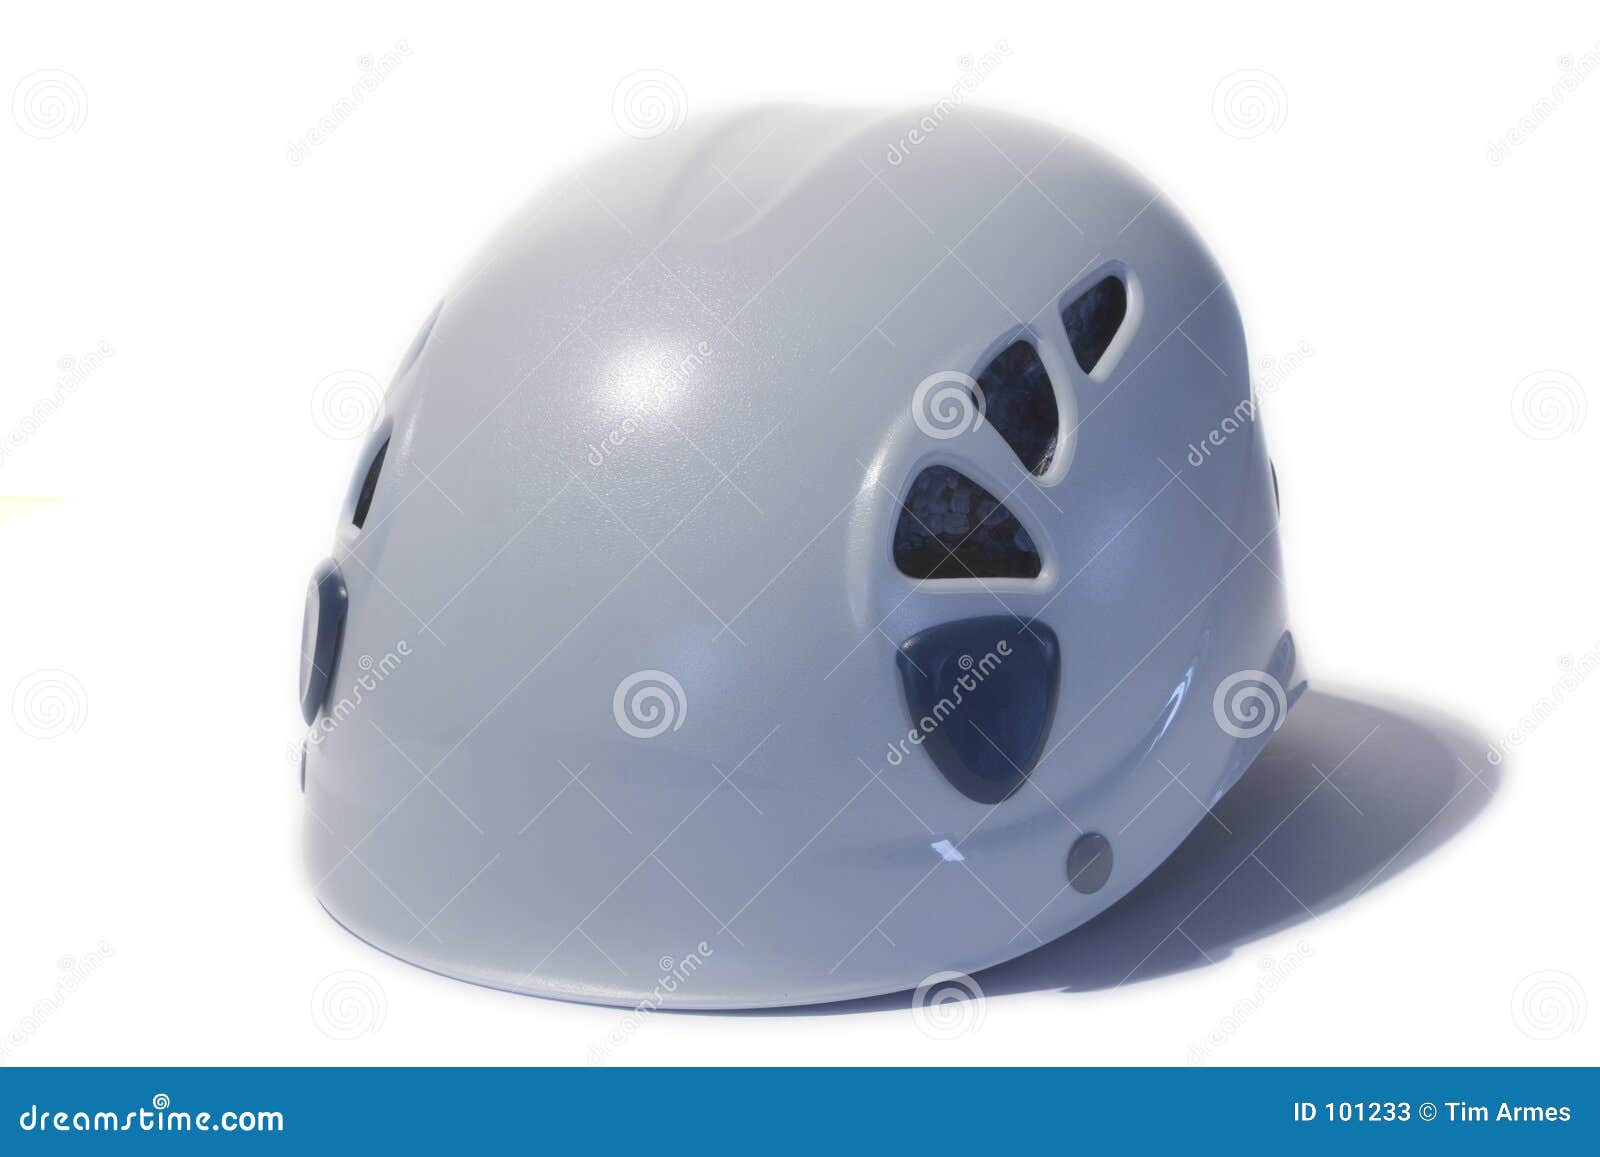 climbing/caving helmet